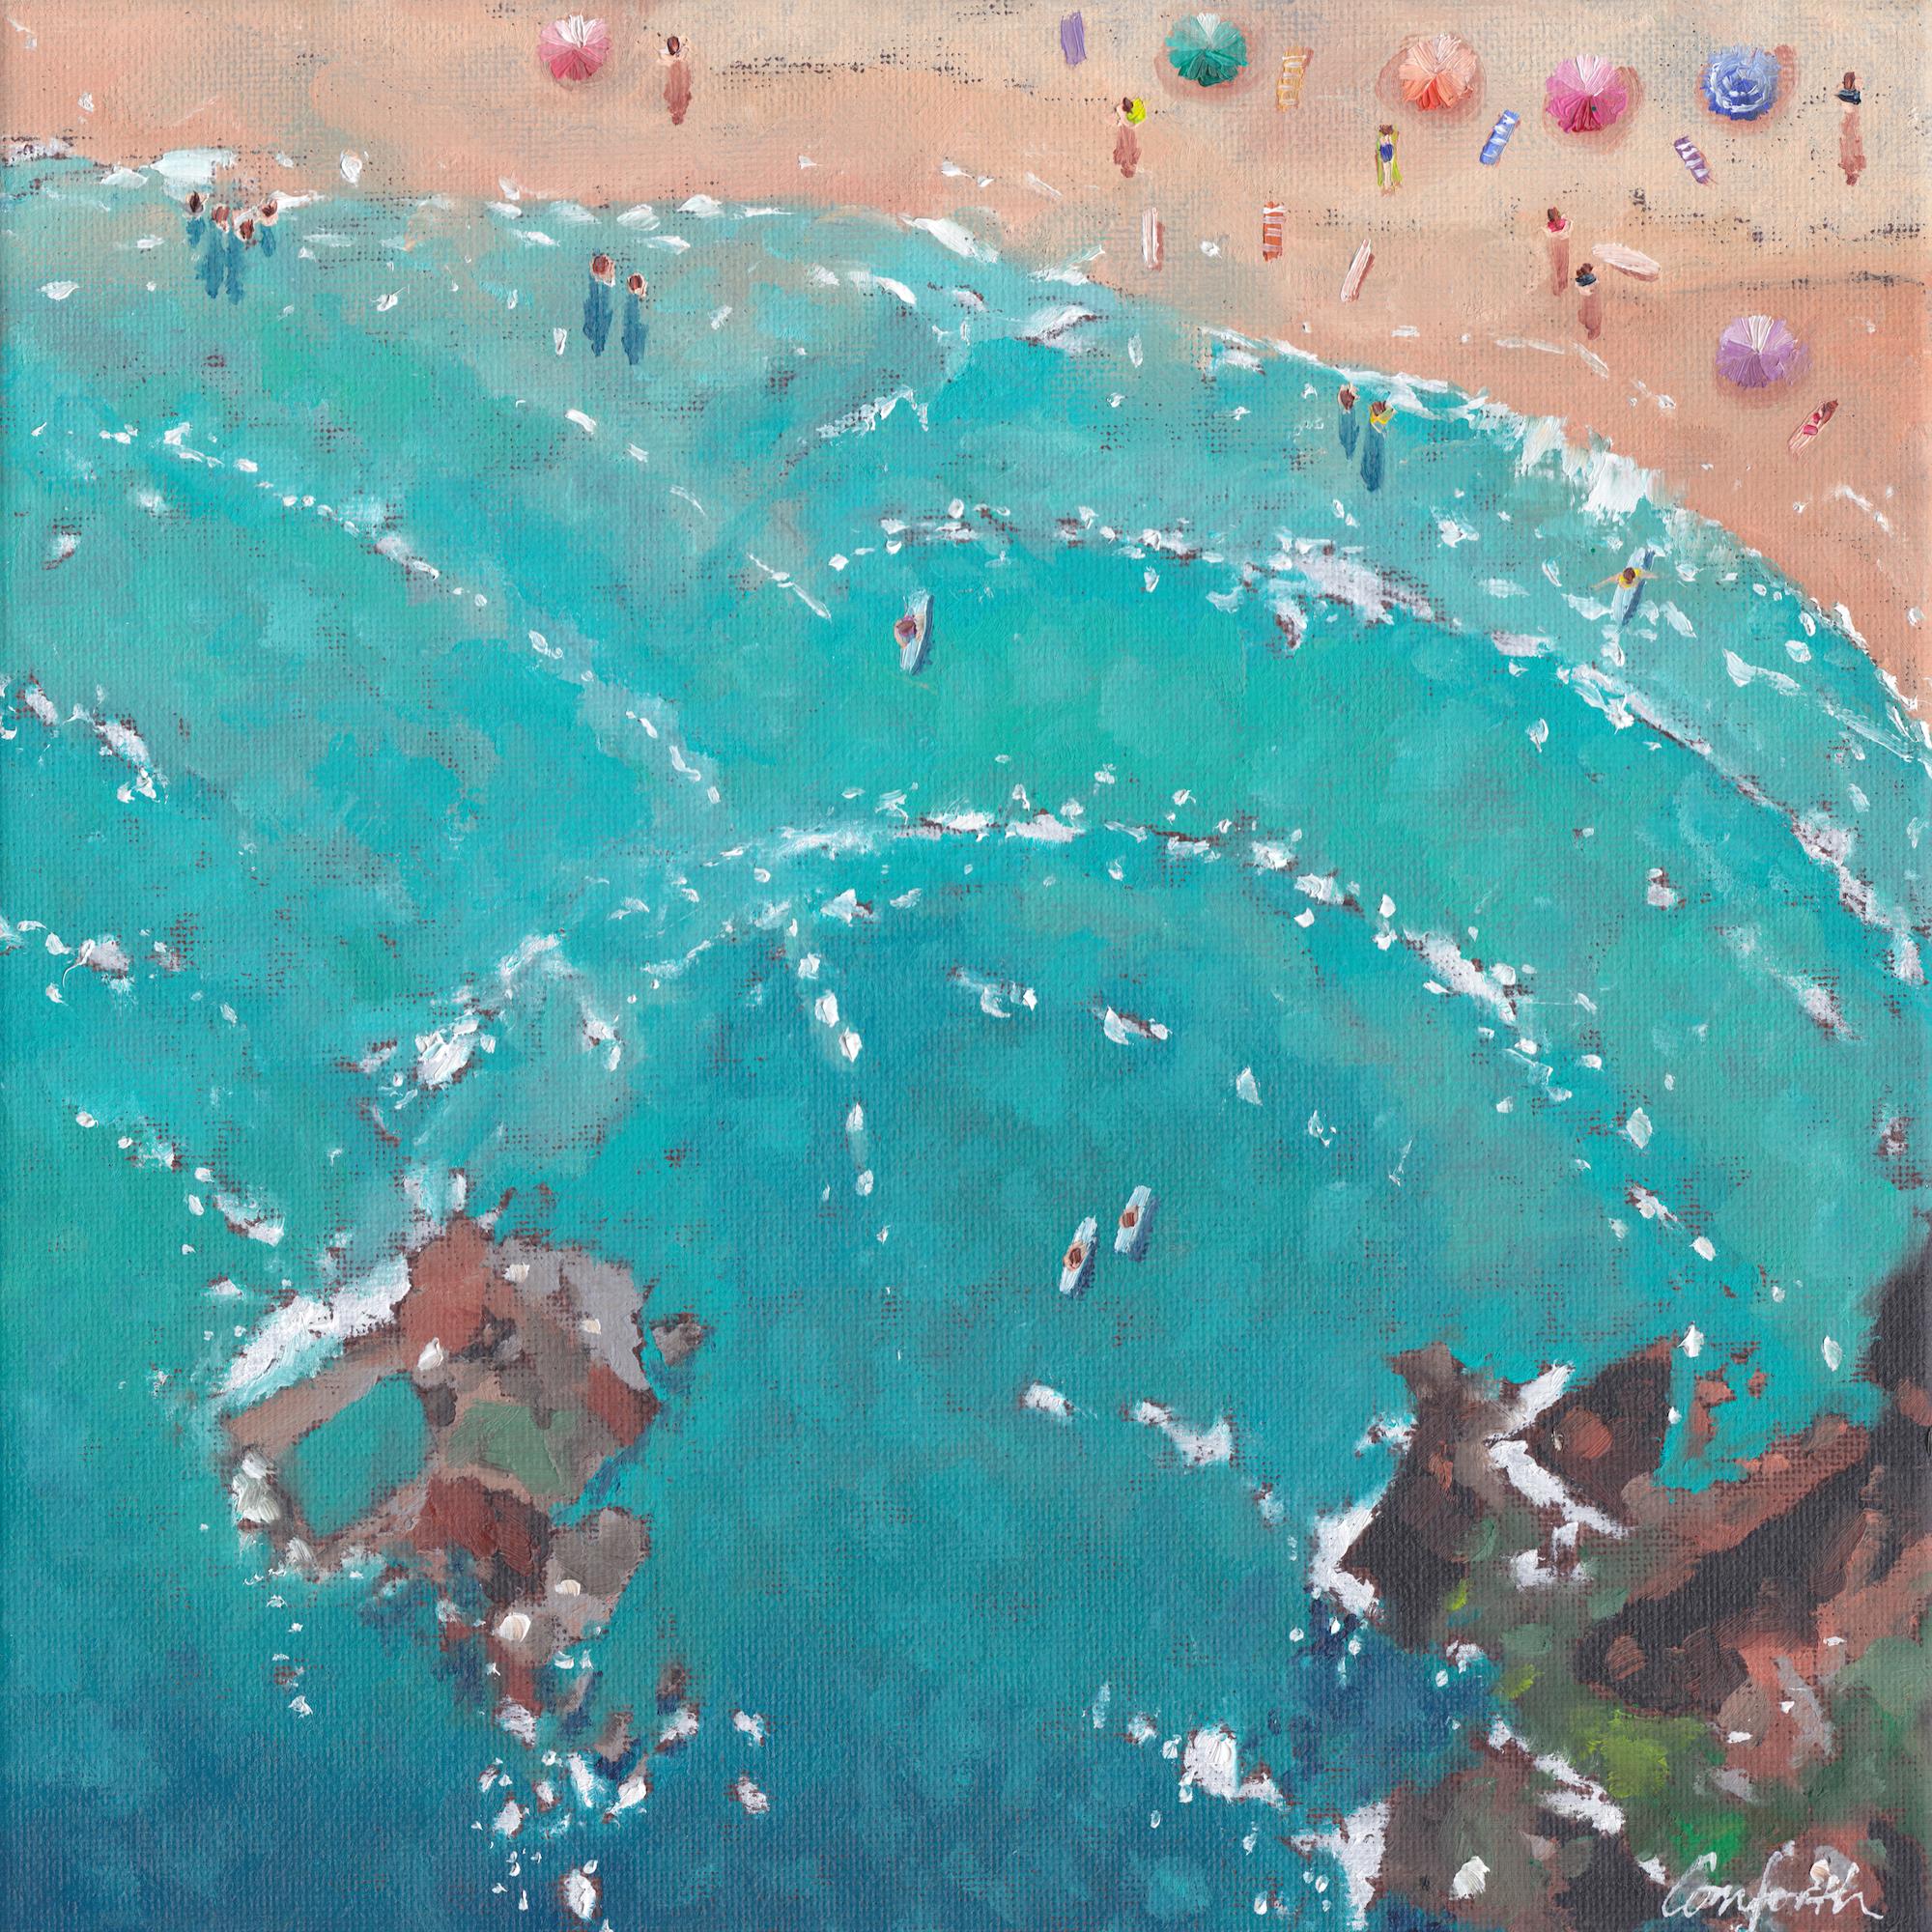 Lenny Cornforth Figurative Painting - Perranporth - contemporary figurative realism original artwork seascape coast